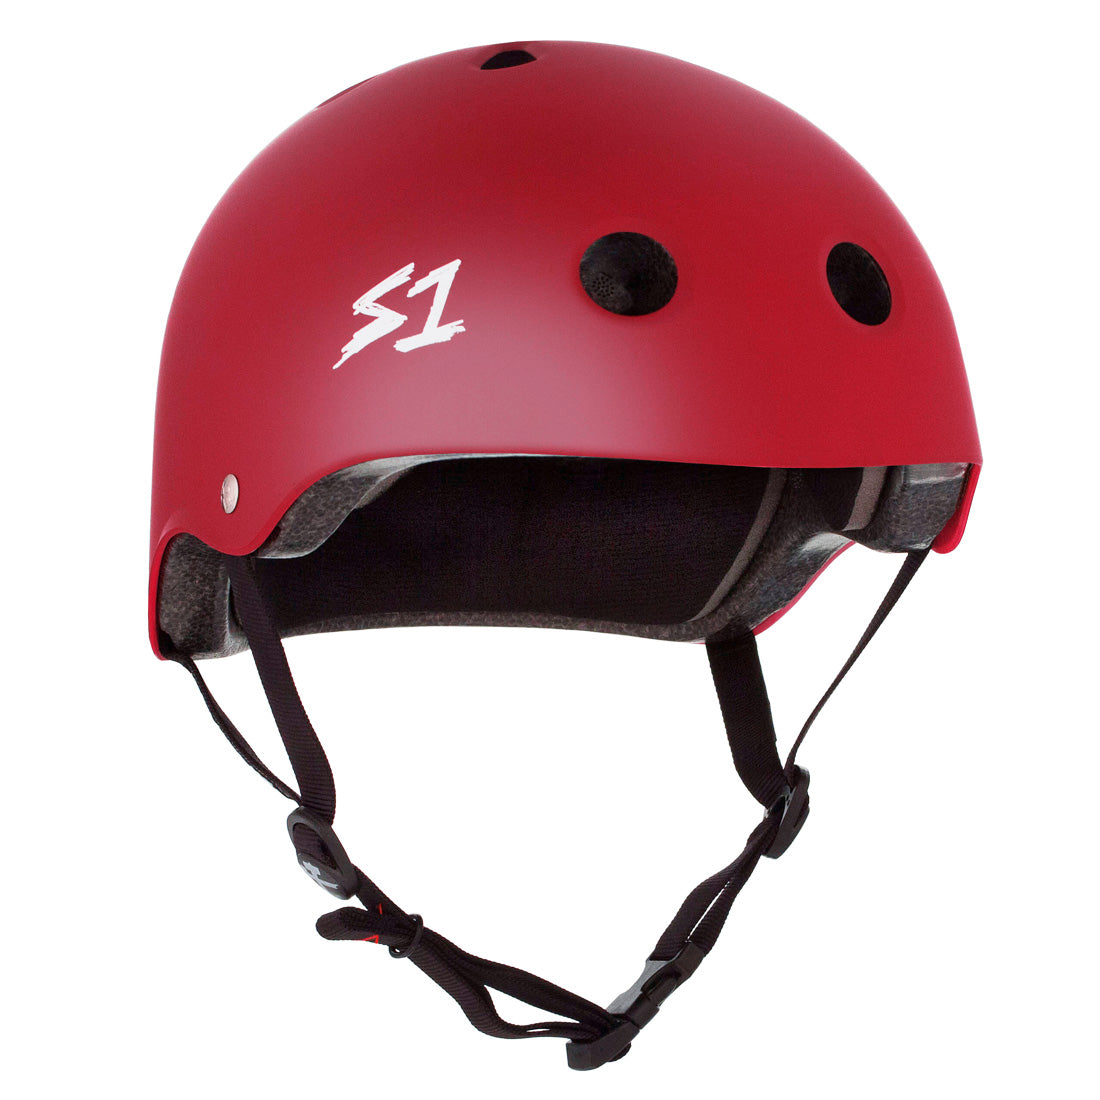 S-One Lifer Helmet - Blood Red Matte Helmets